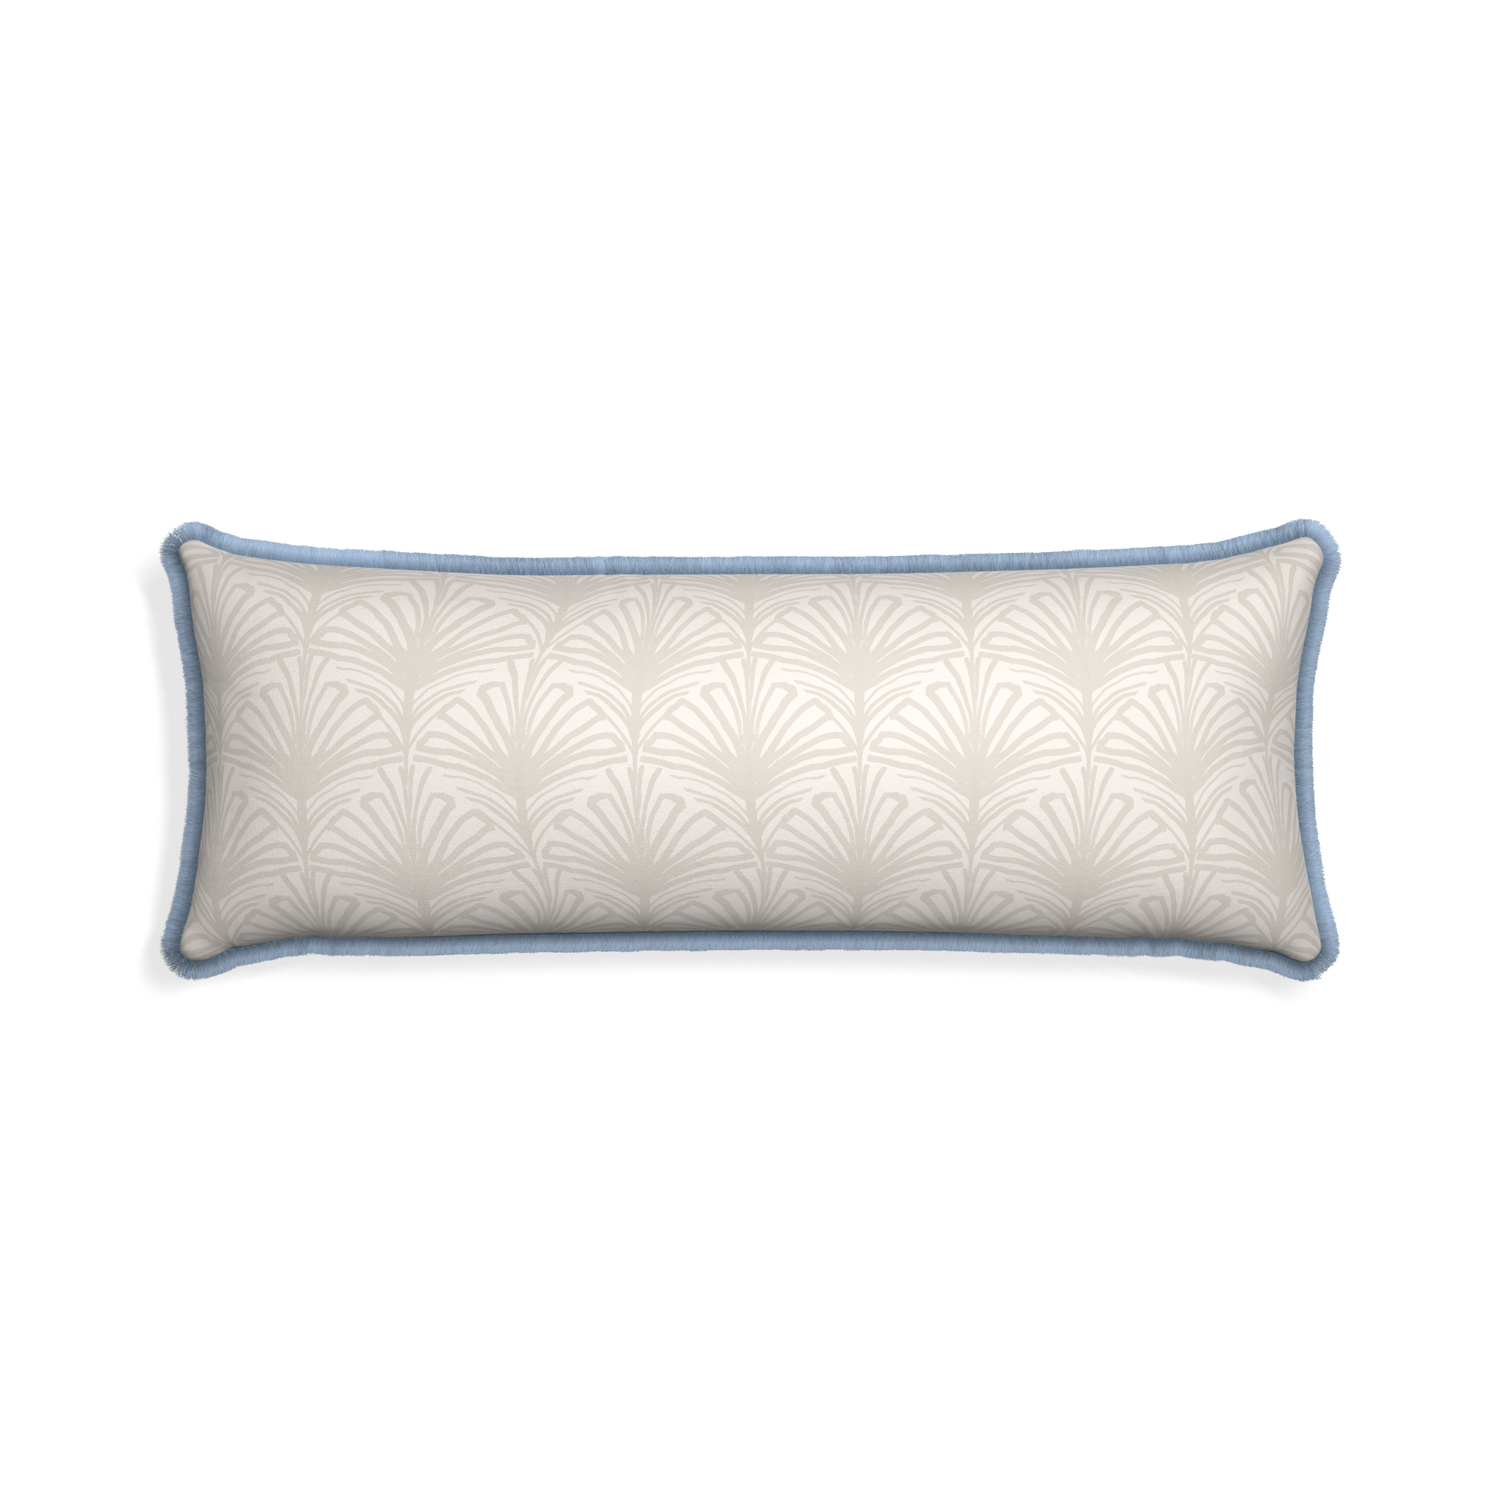 Xl-lumbar suzy sand custom pillow with sky fringe on white background